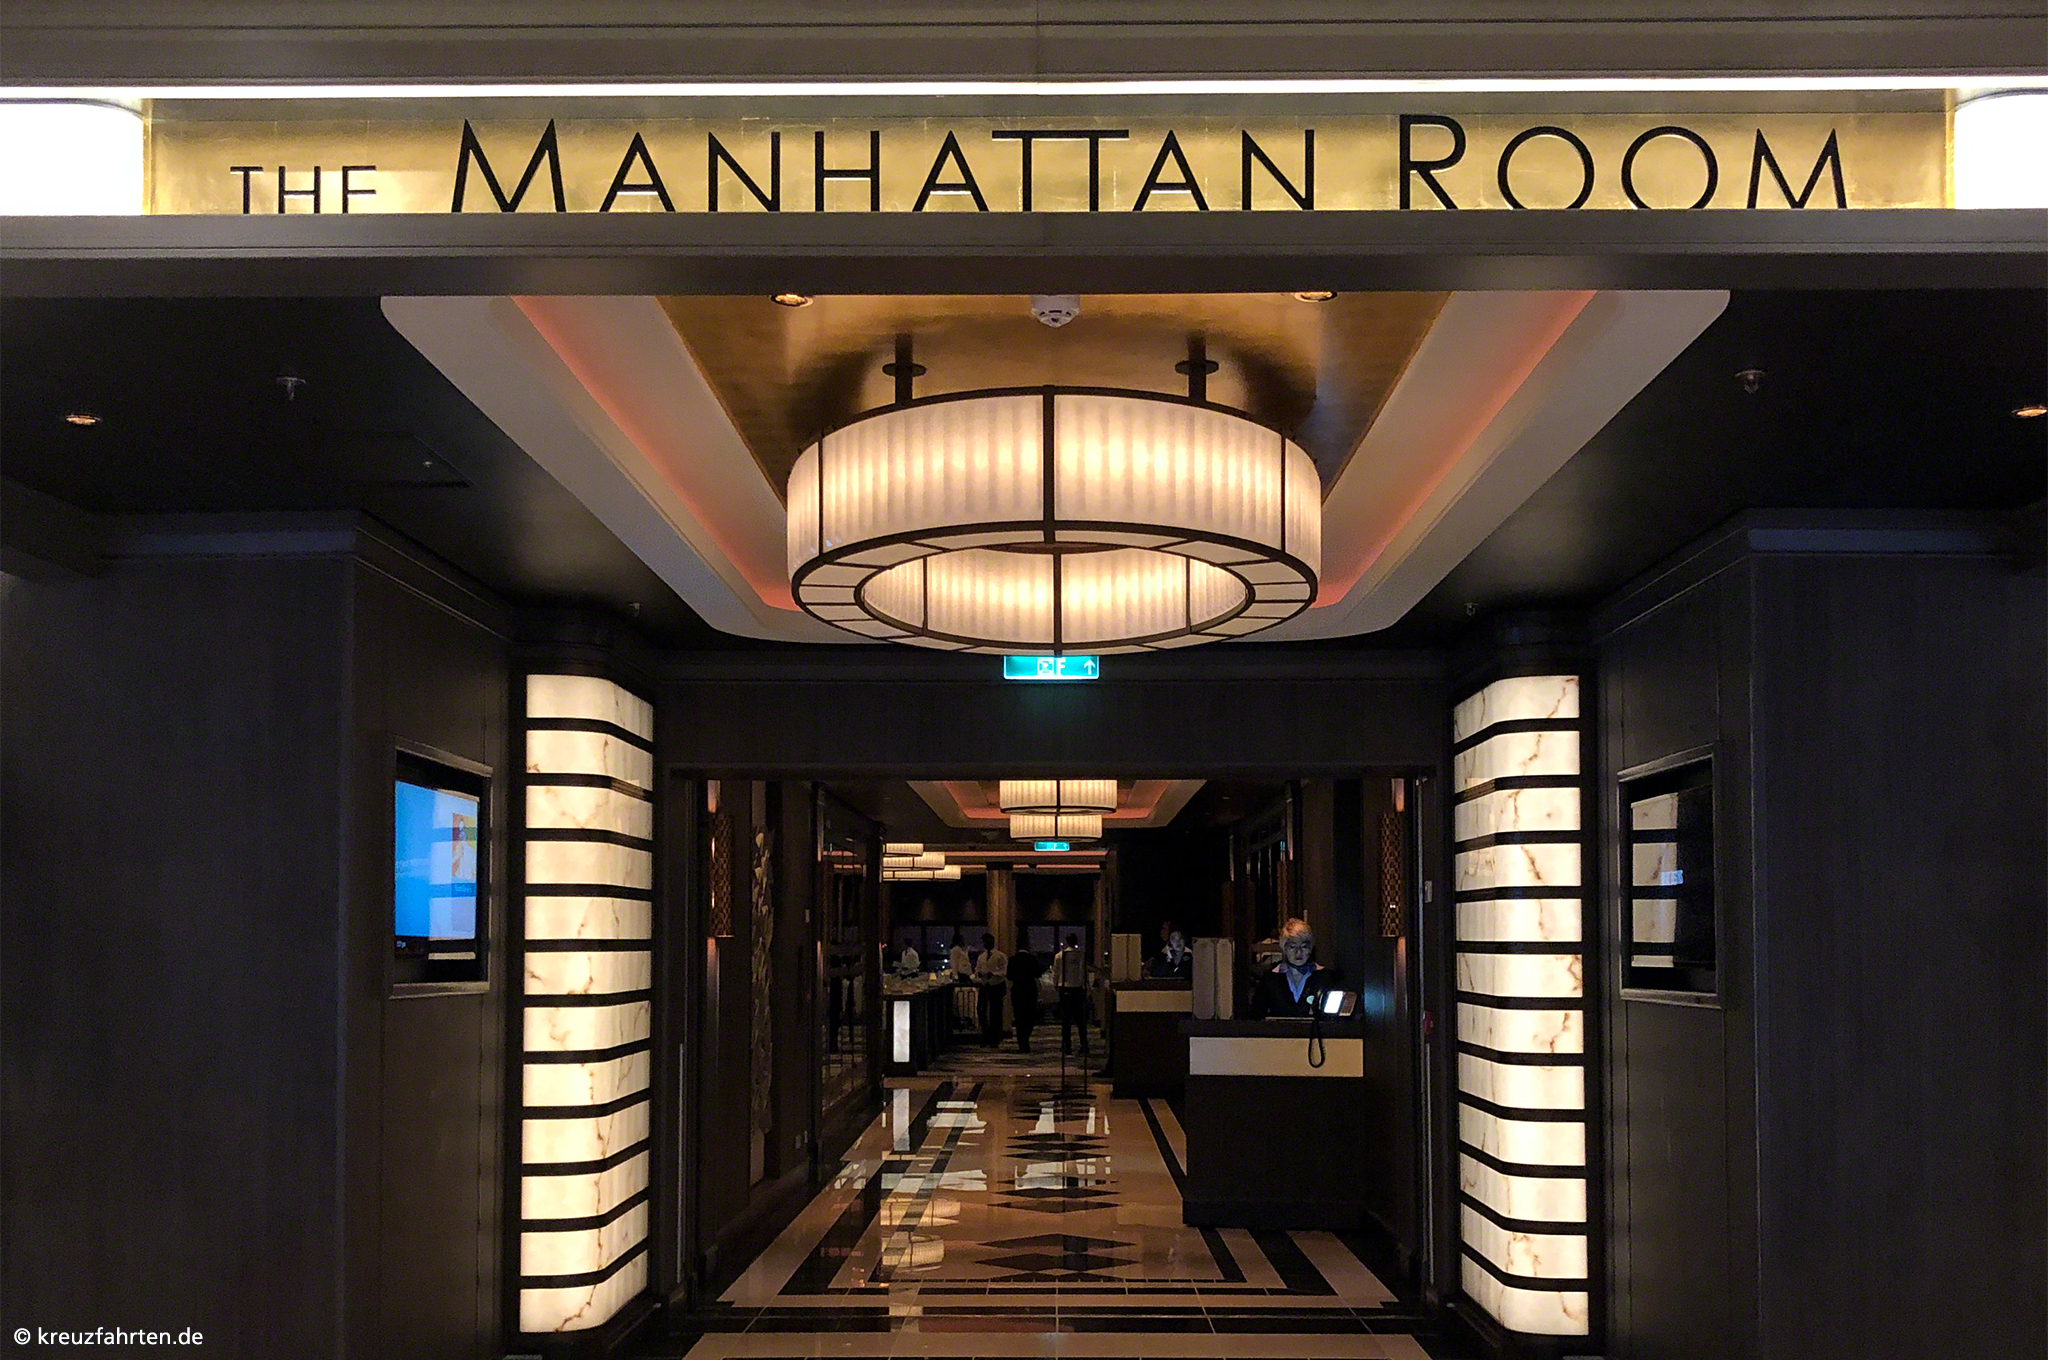 The Manhattan Room